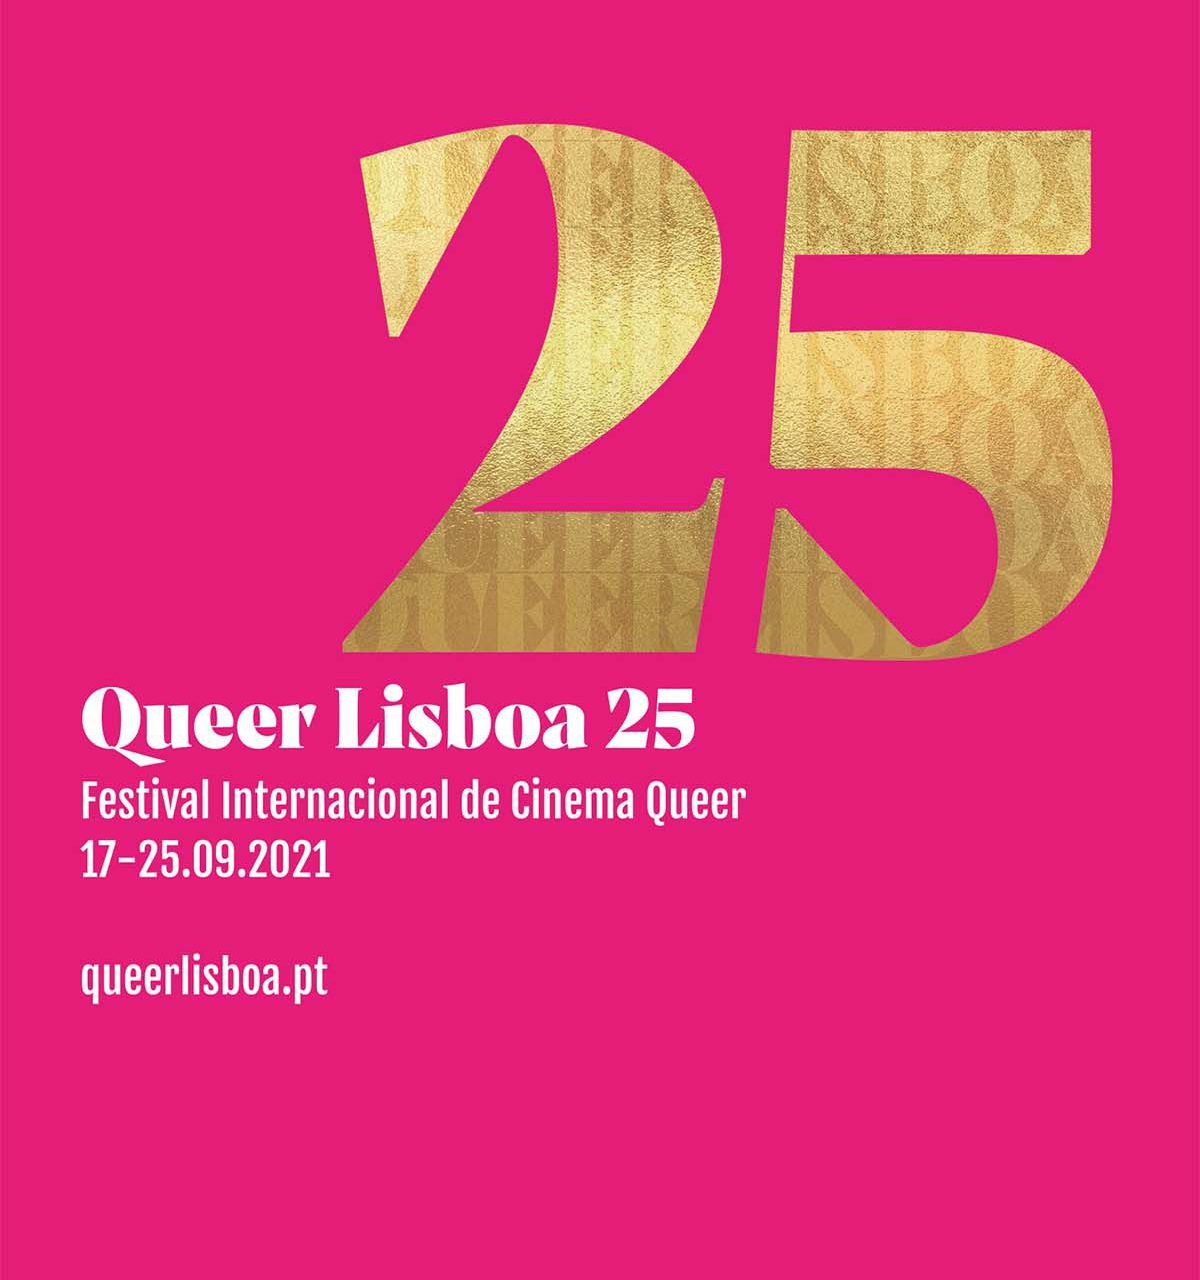 https://jpva.pt/wp-content/uploads/2021/10/Queer-Lisboa-21-1200x1280.jpg